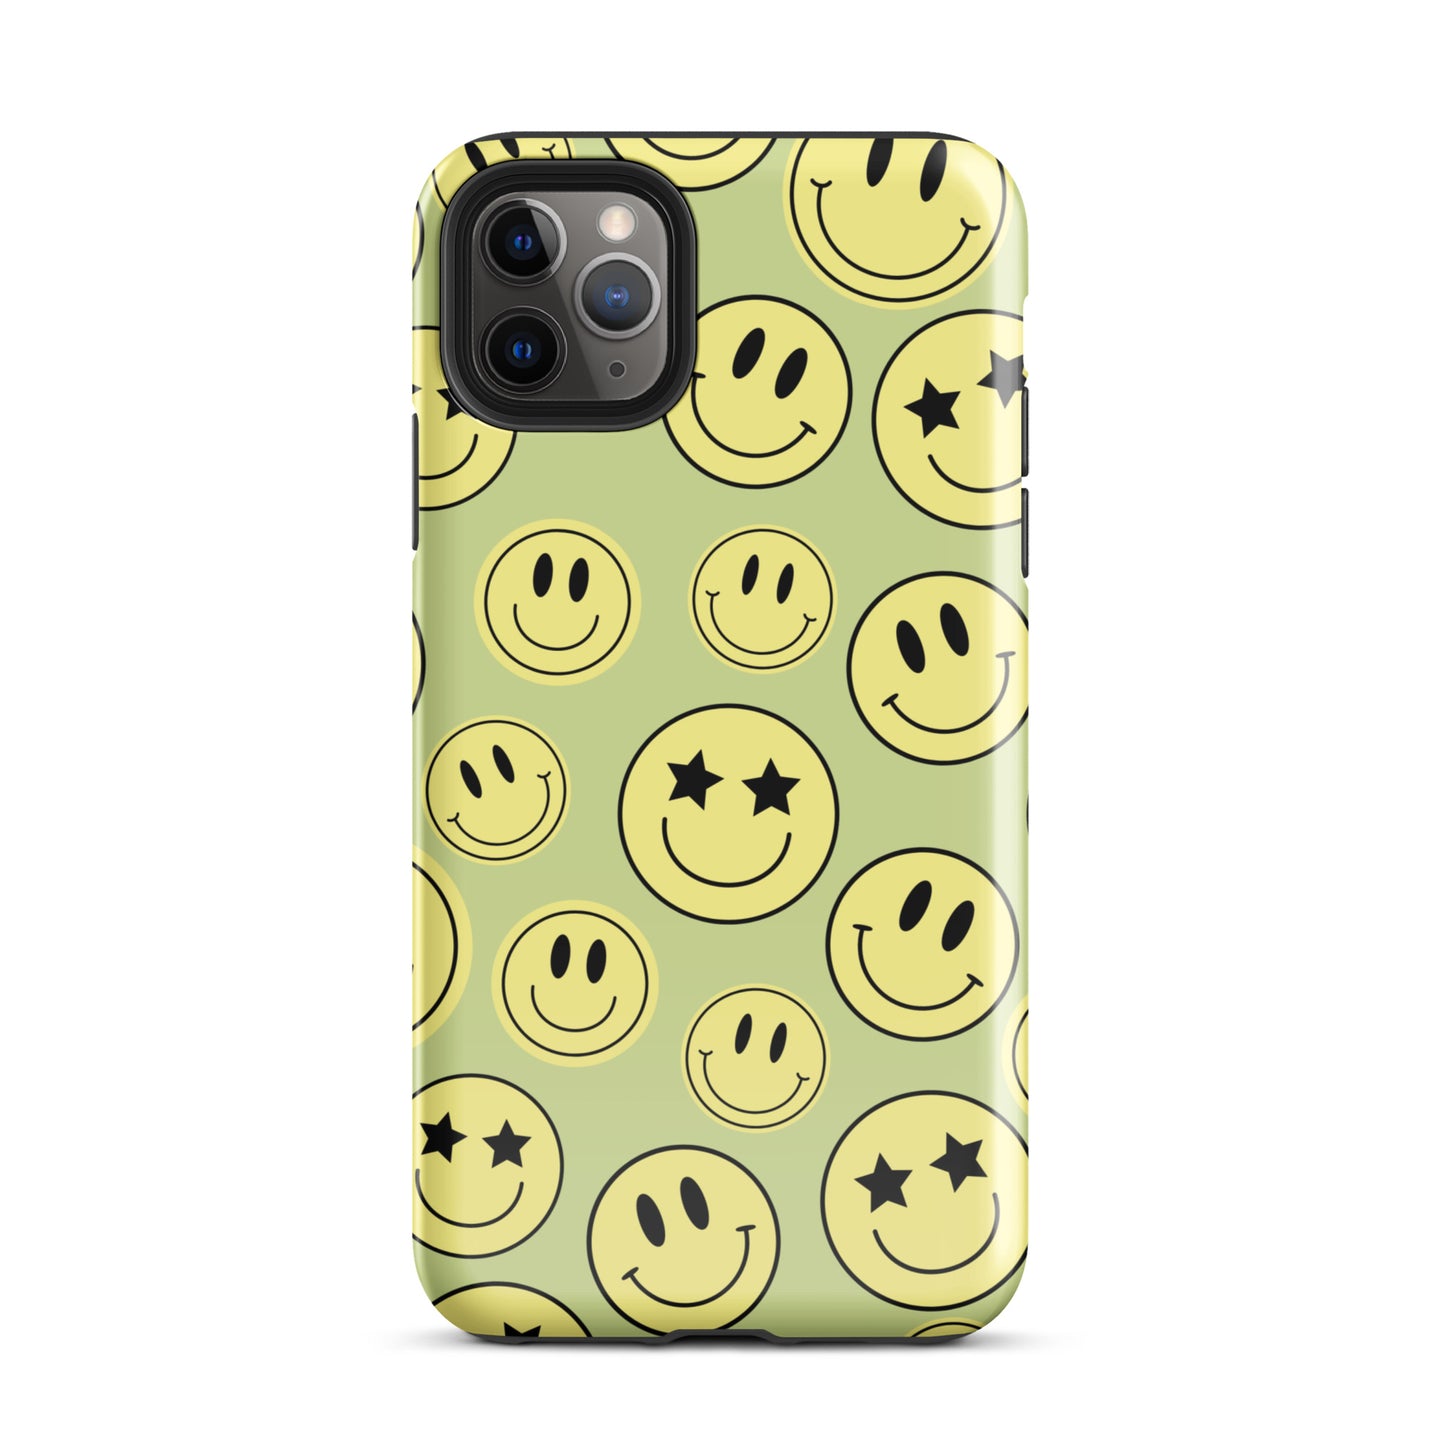 Green Smiley Faces iPhone Case